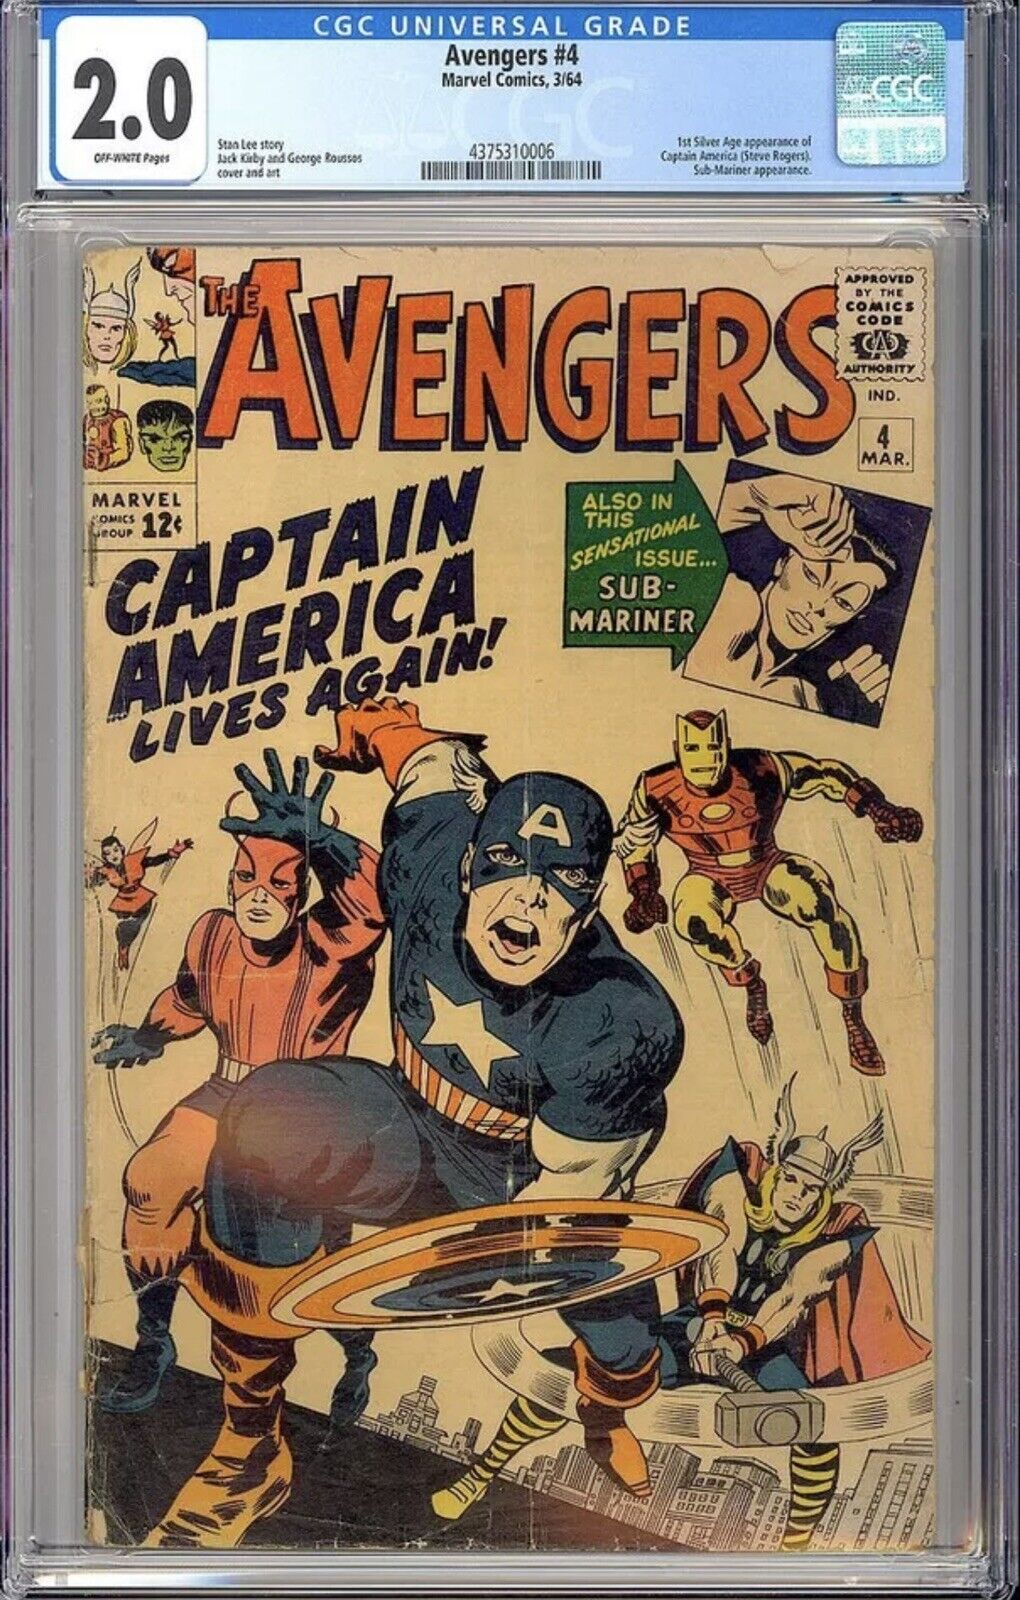 Avengers #4 1st Silver Age App. Captain America Marvel Comic 1964 CGC 2.0